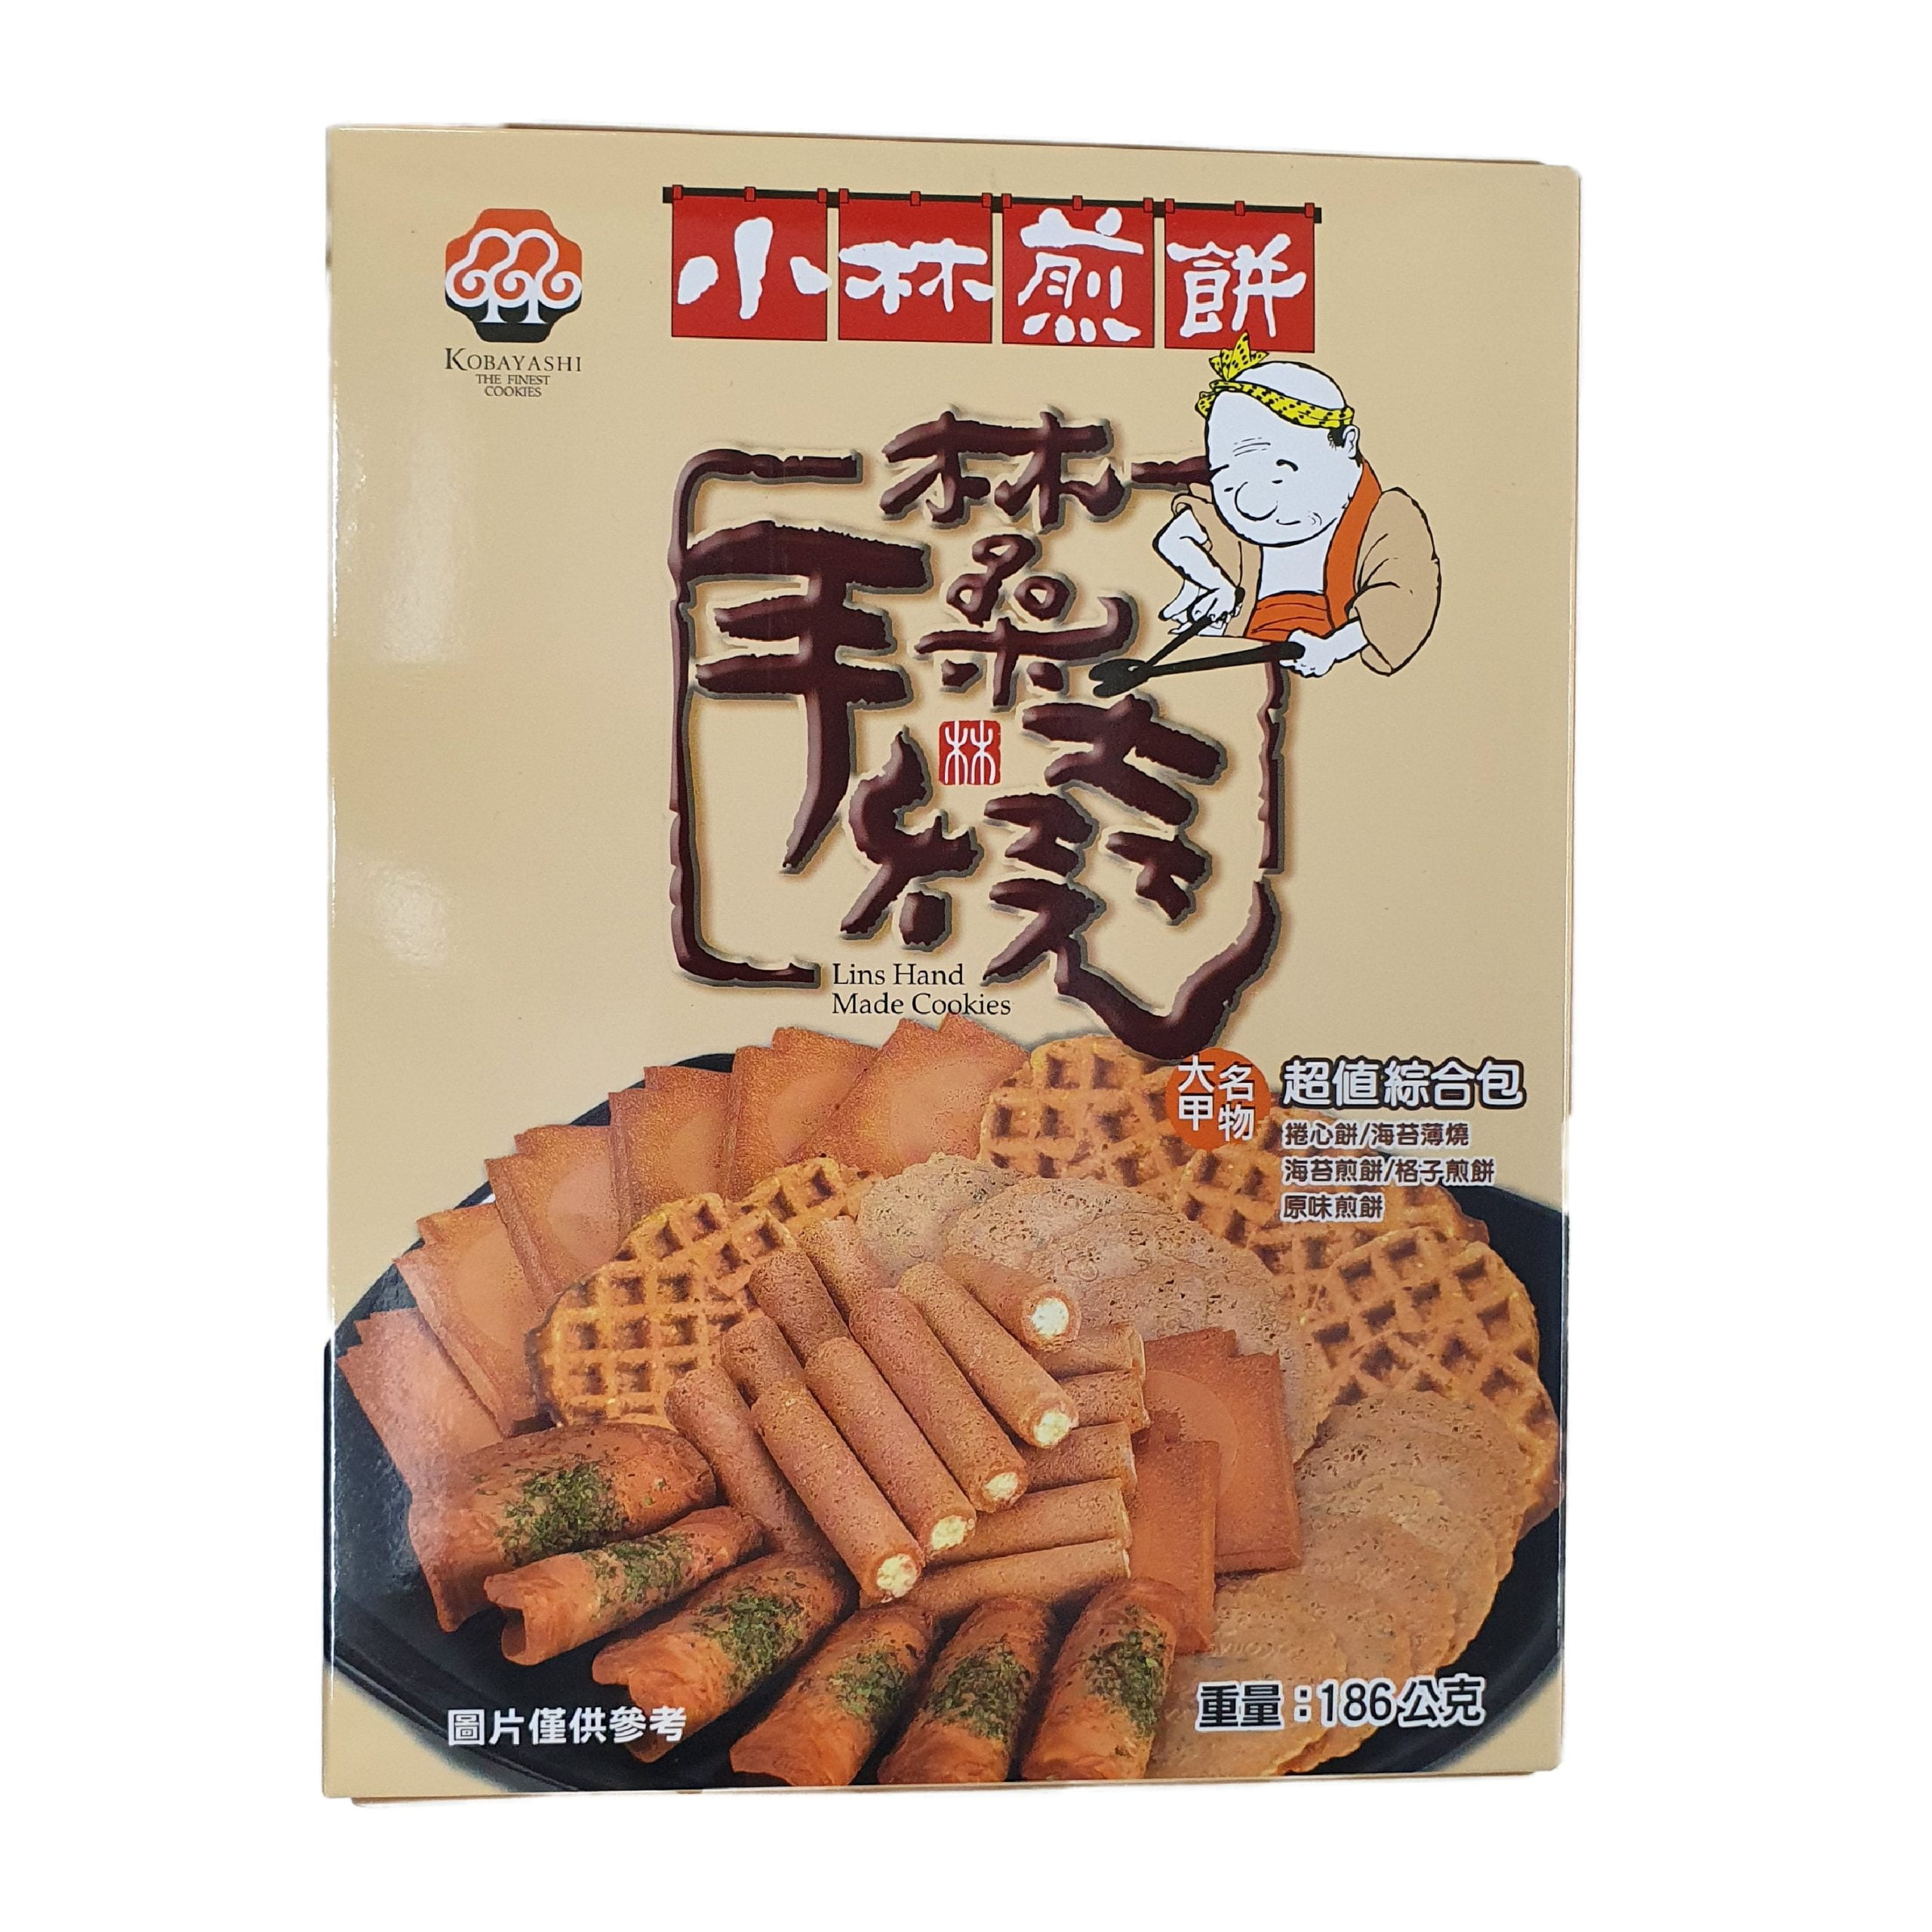 Taiwan Kobayashi Lins Handmade Cookies 186g 台湾小林煎餅综合包 Singapore Food United